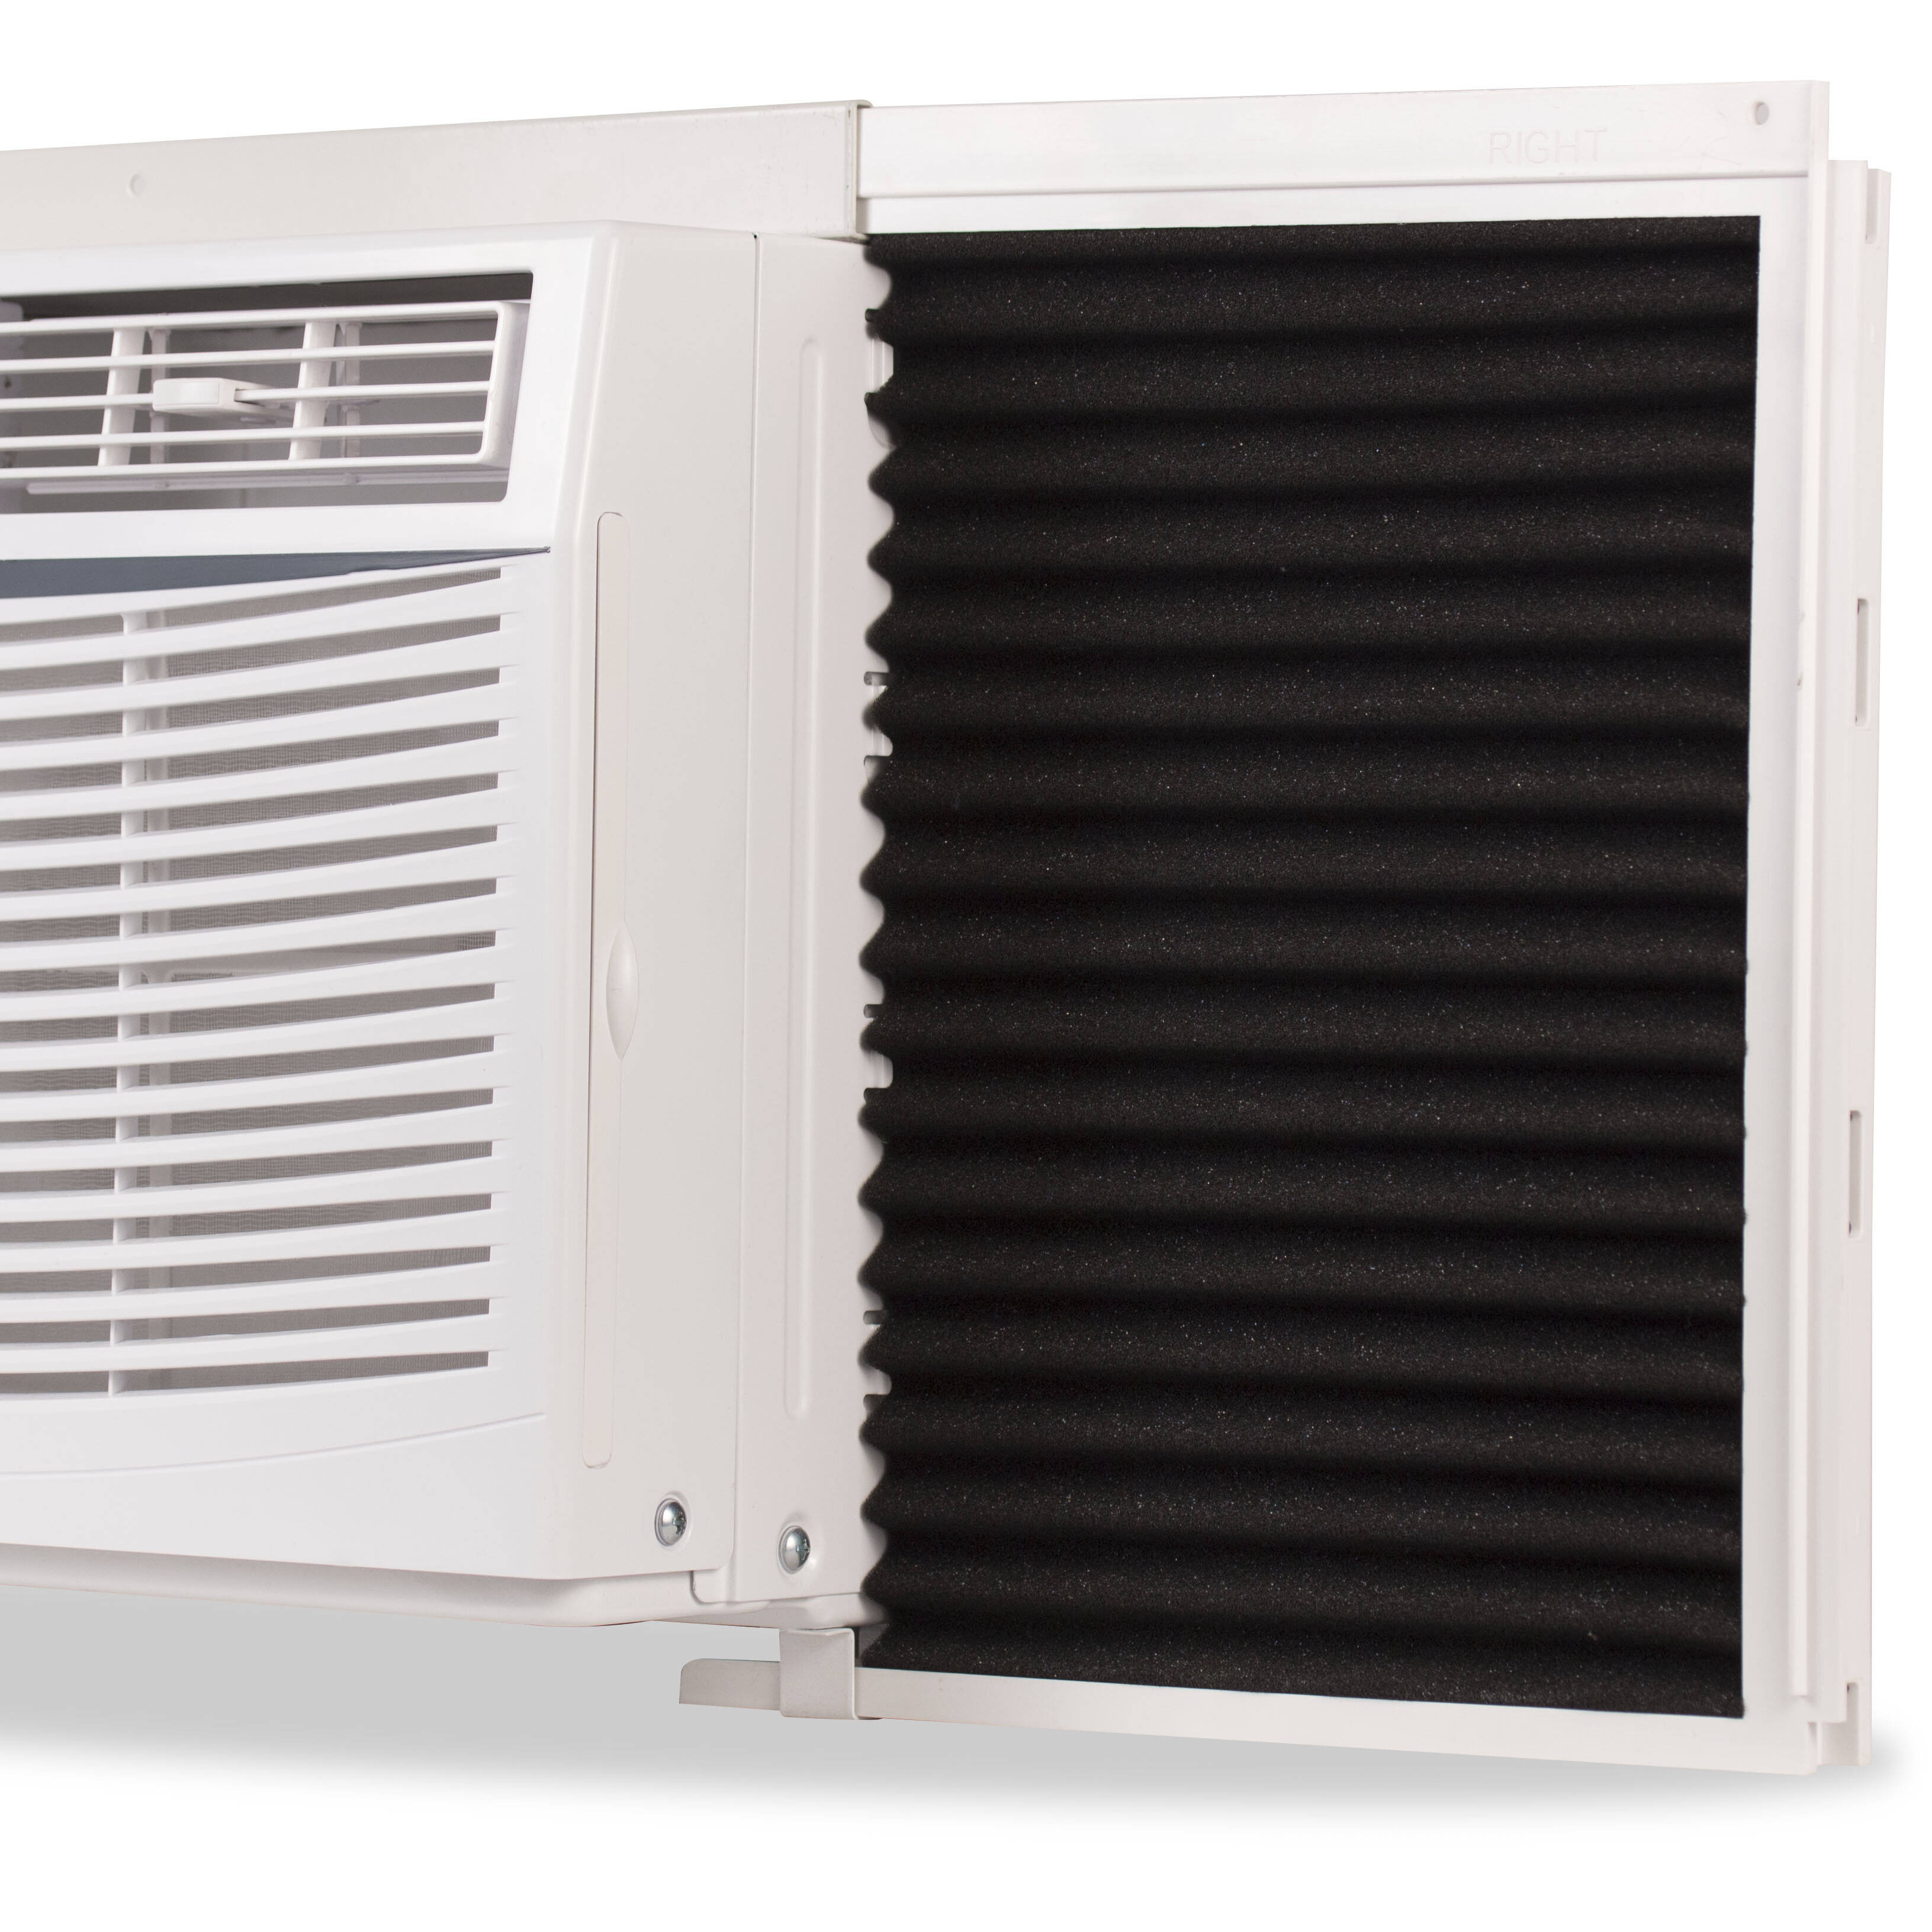 air-conditioner-insulation-discount-sale-save-58-jlcatj-gob-mx